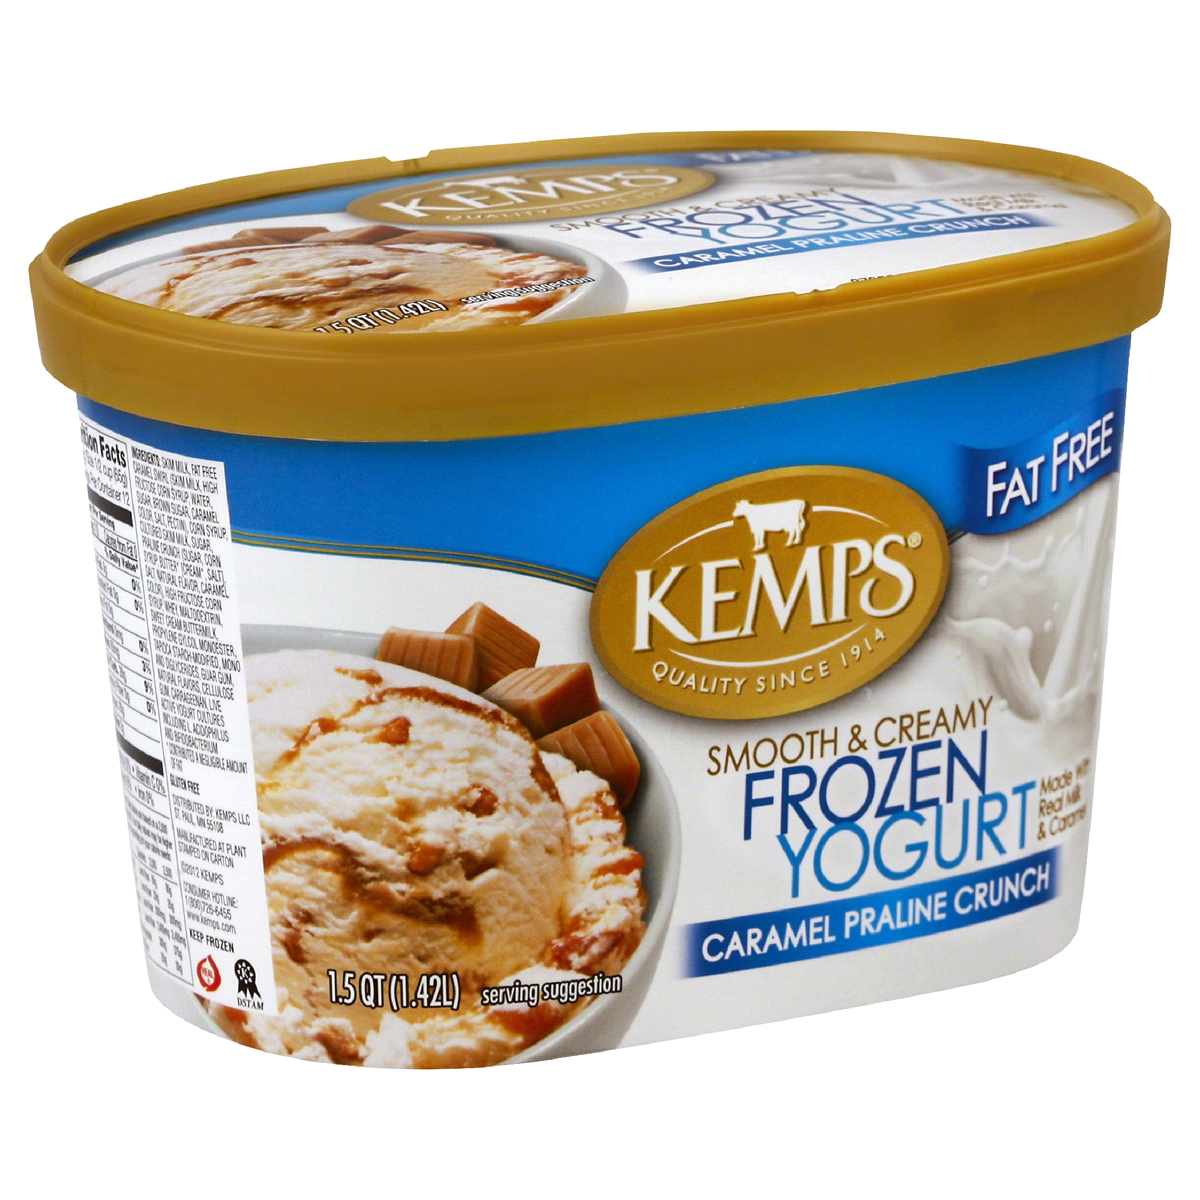 slide 1 of 2, Kemps Fat Free Caramel Praline Crunch Frozen Yogurt, 1.5 qt